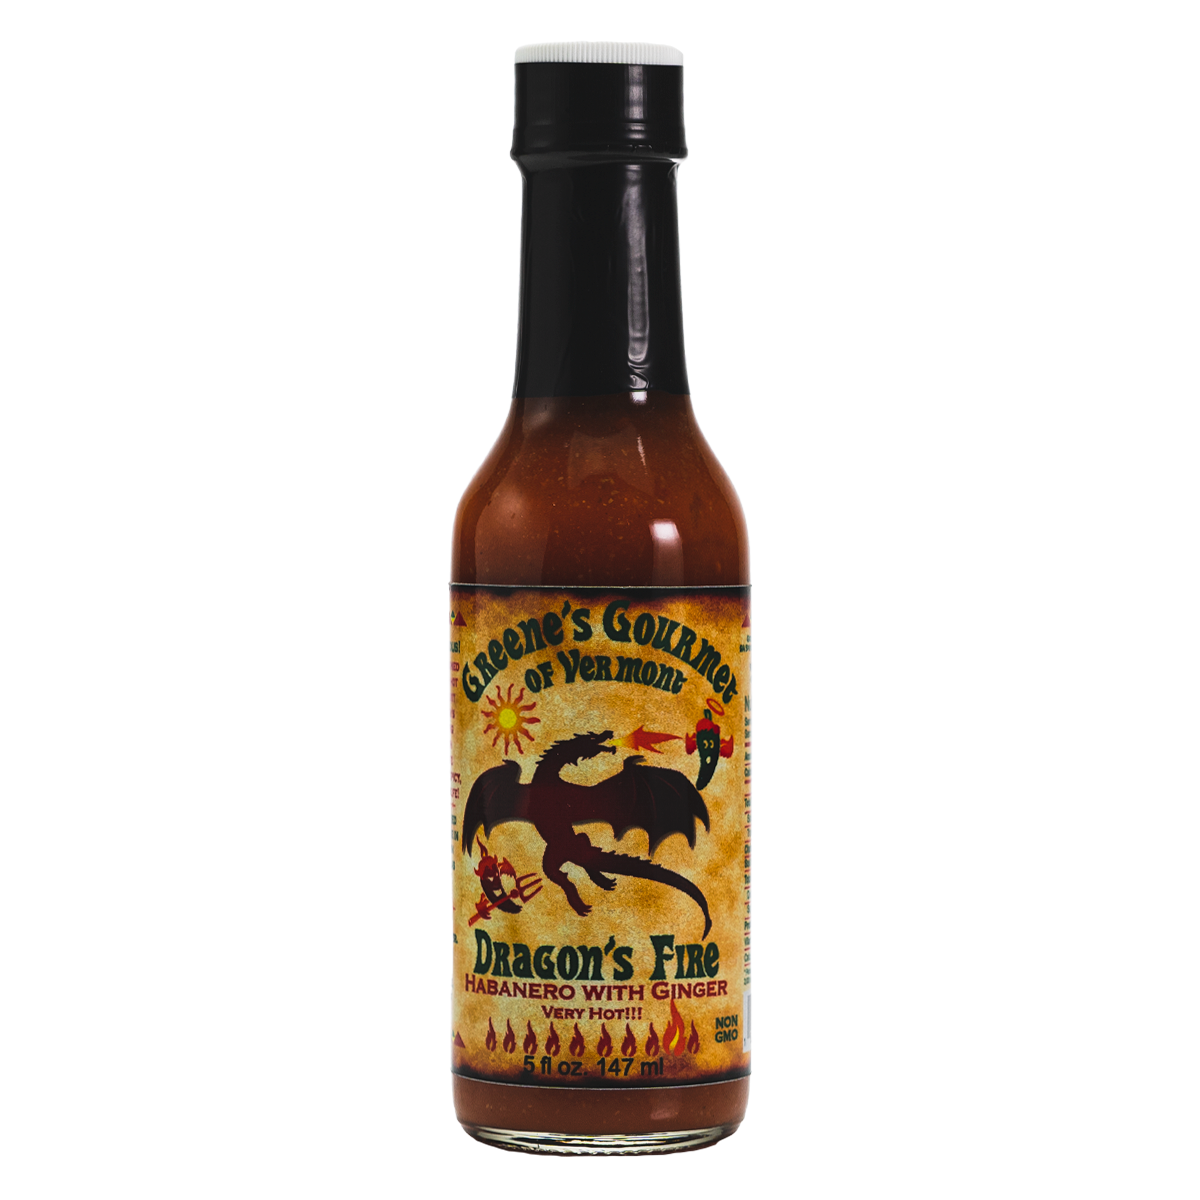 Greene's Gourmet Dragon's Fire Hot Sauce